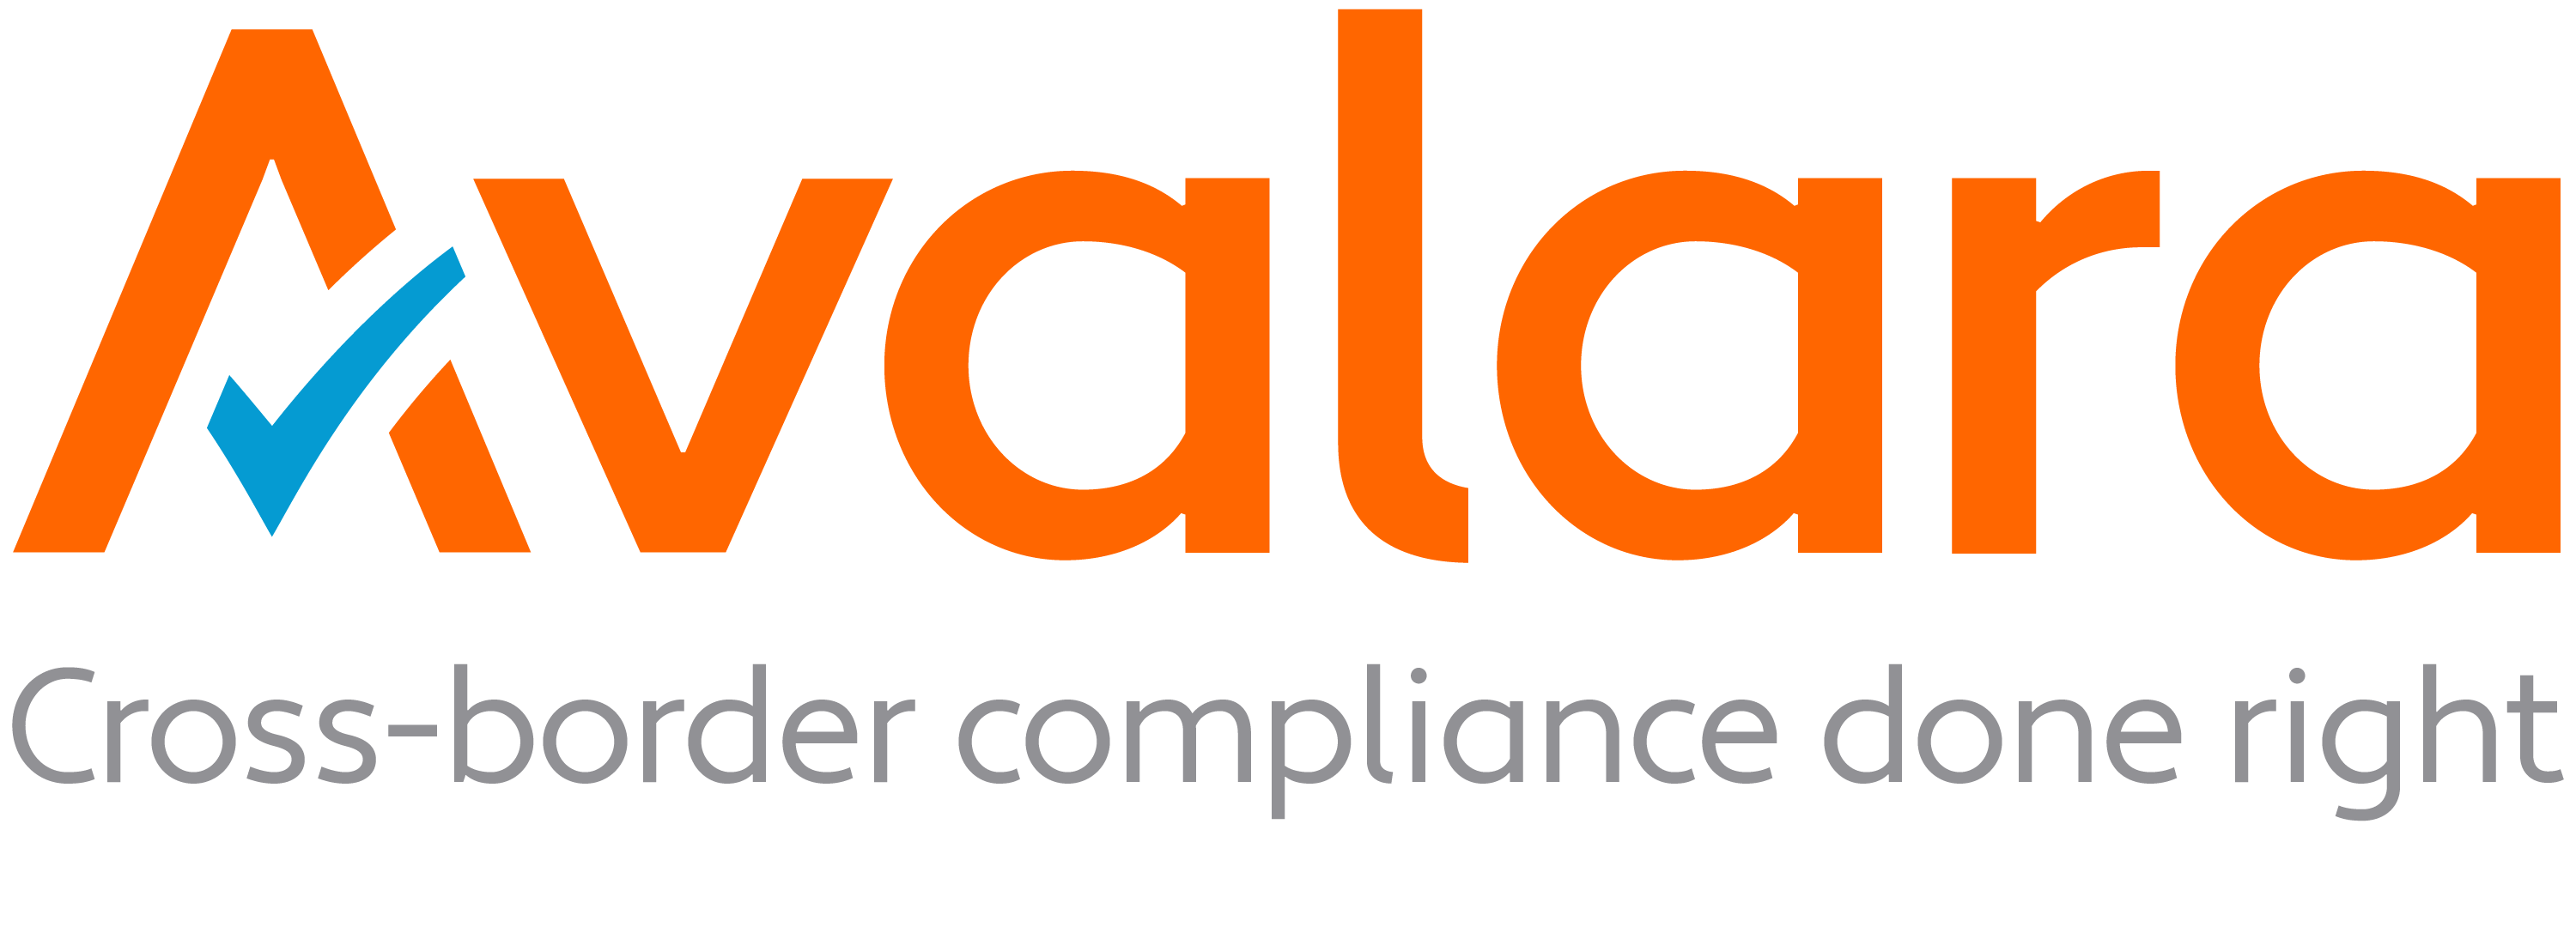 Avalara Logo